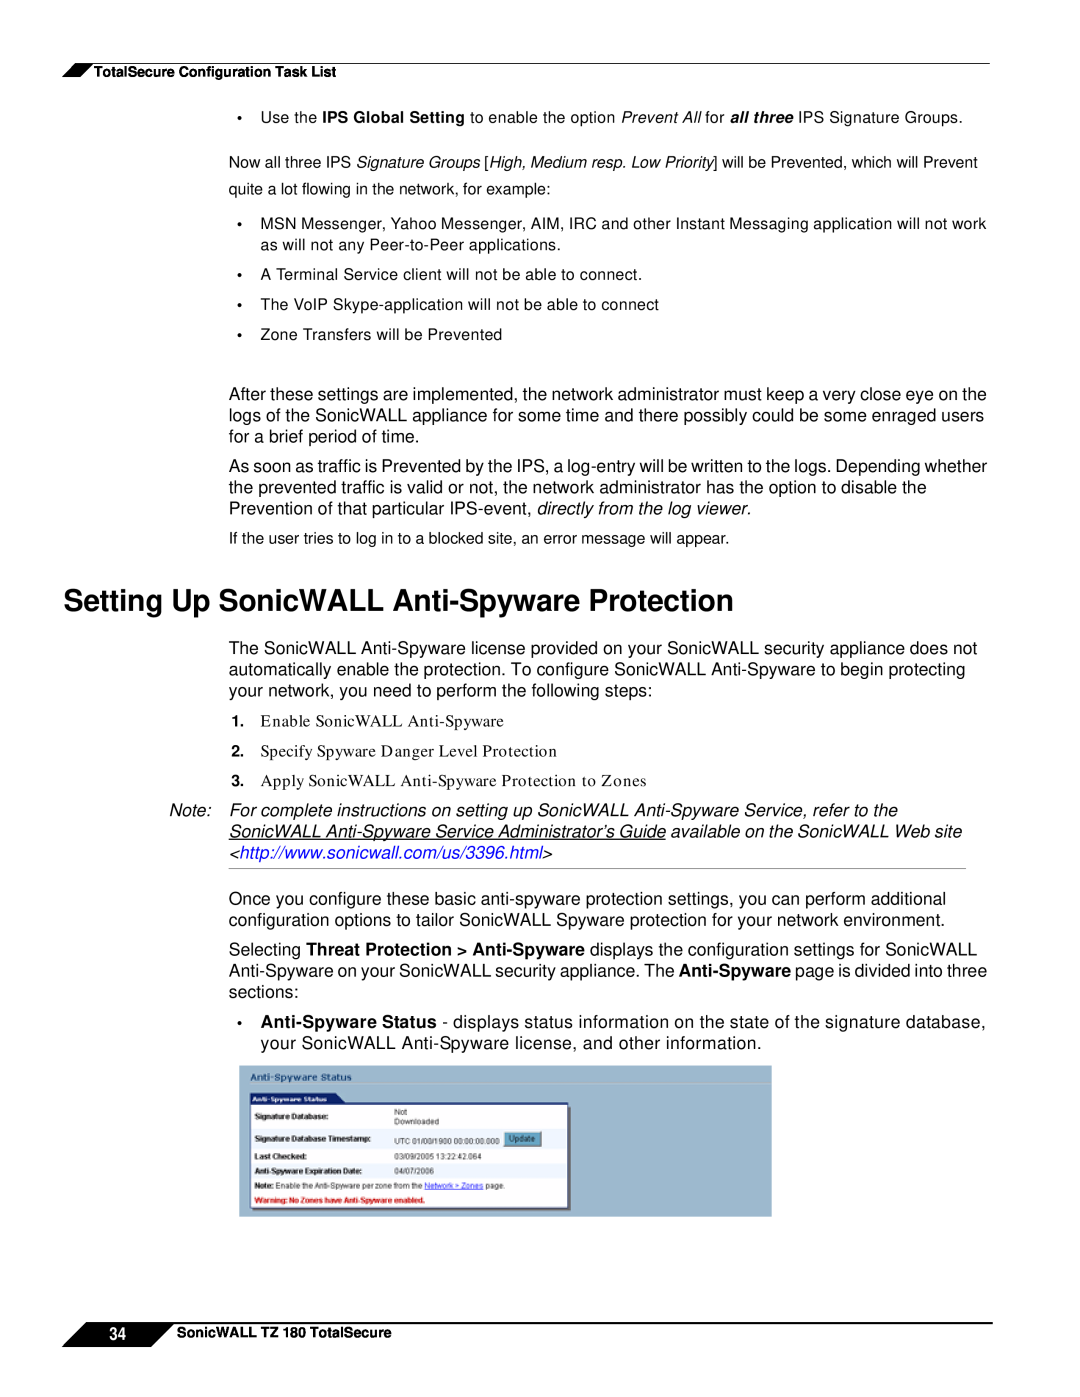 SonicWALL TZ 180 manual Setting Up SonicWALL Anti-SpywareProtection, Enable SonicWALL Anti-Spyware 